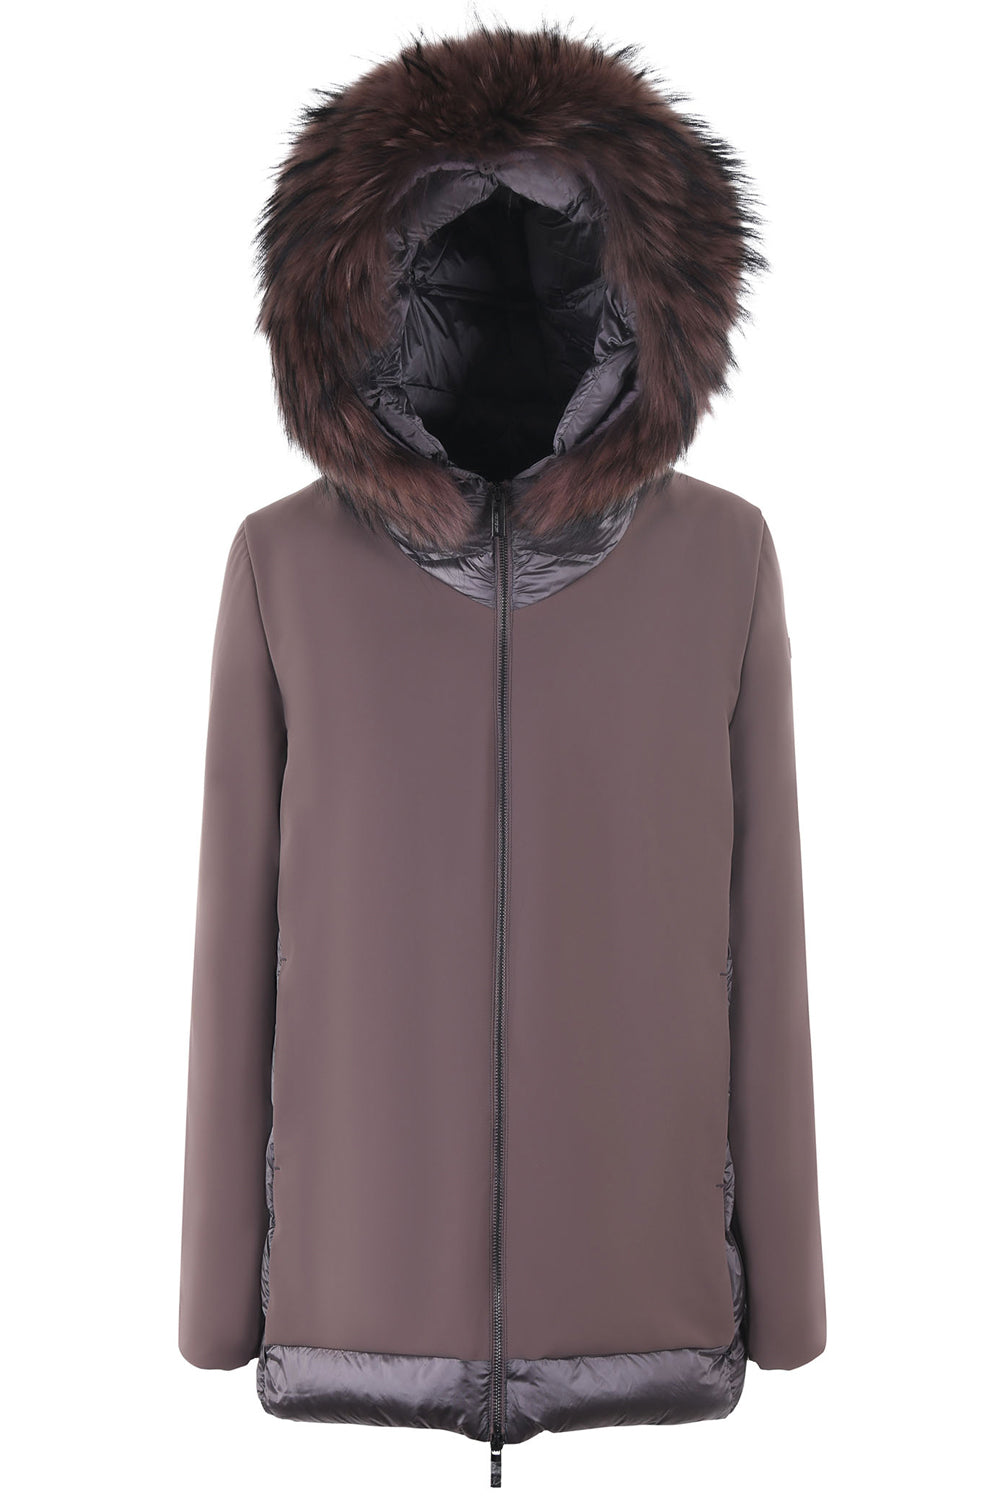 Image of RRD Giubbotto Winter Hybrid Zar Lady Fur